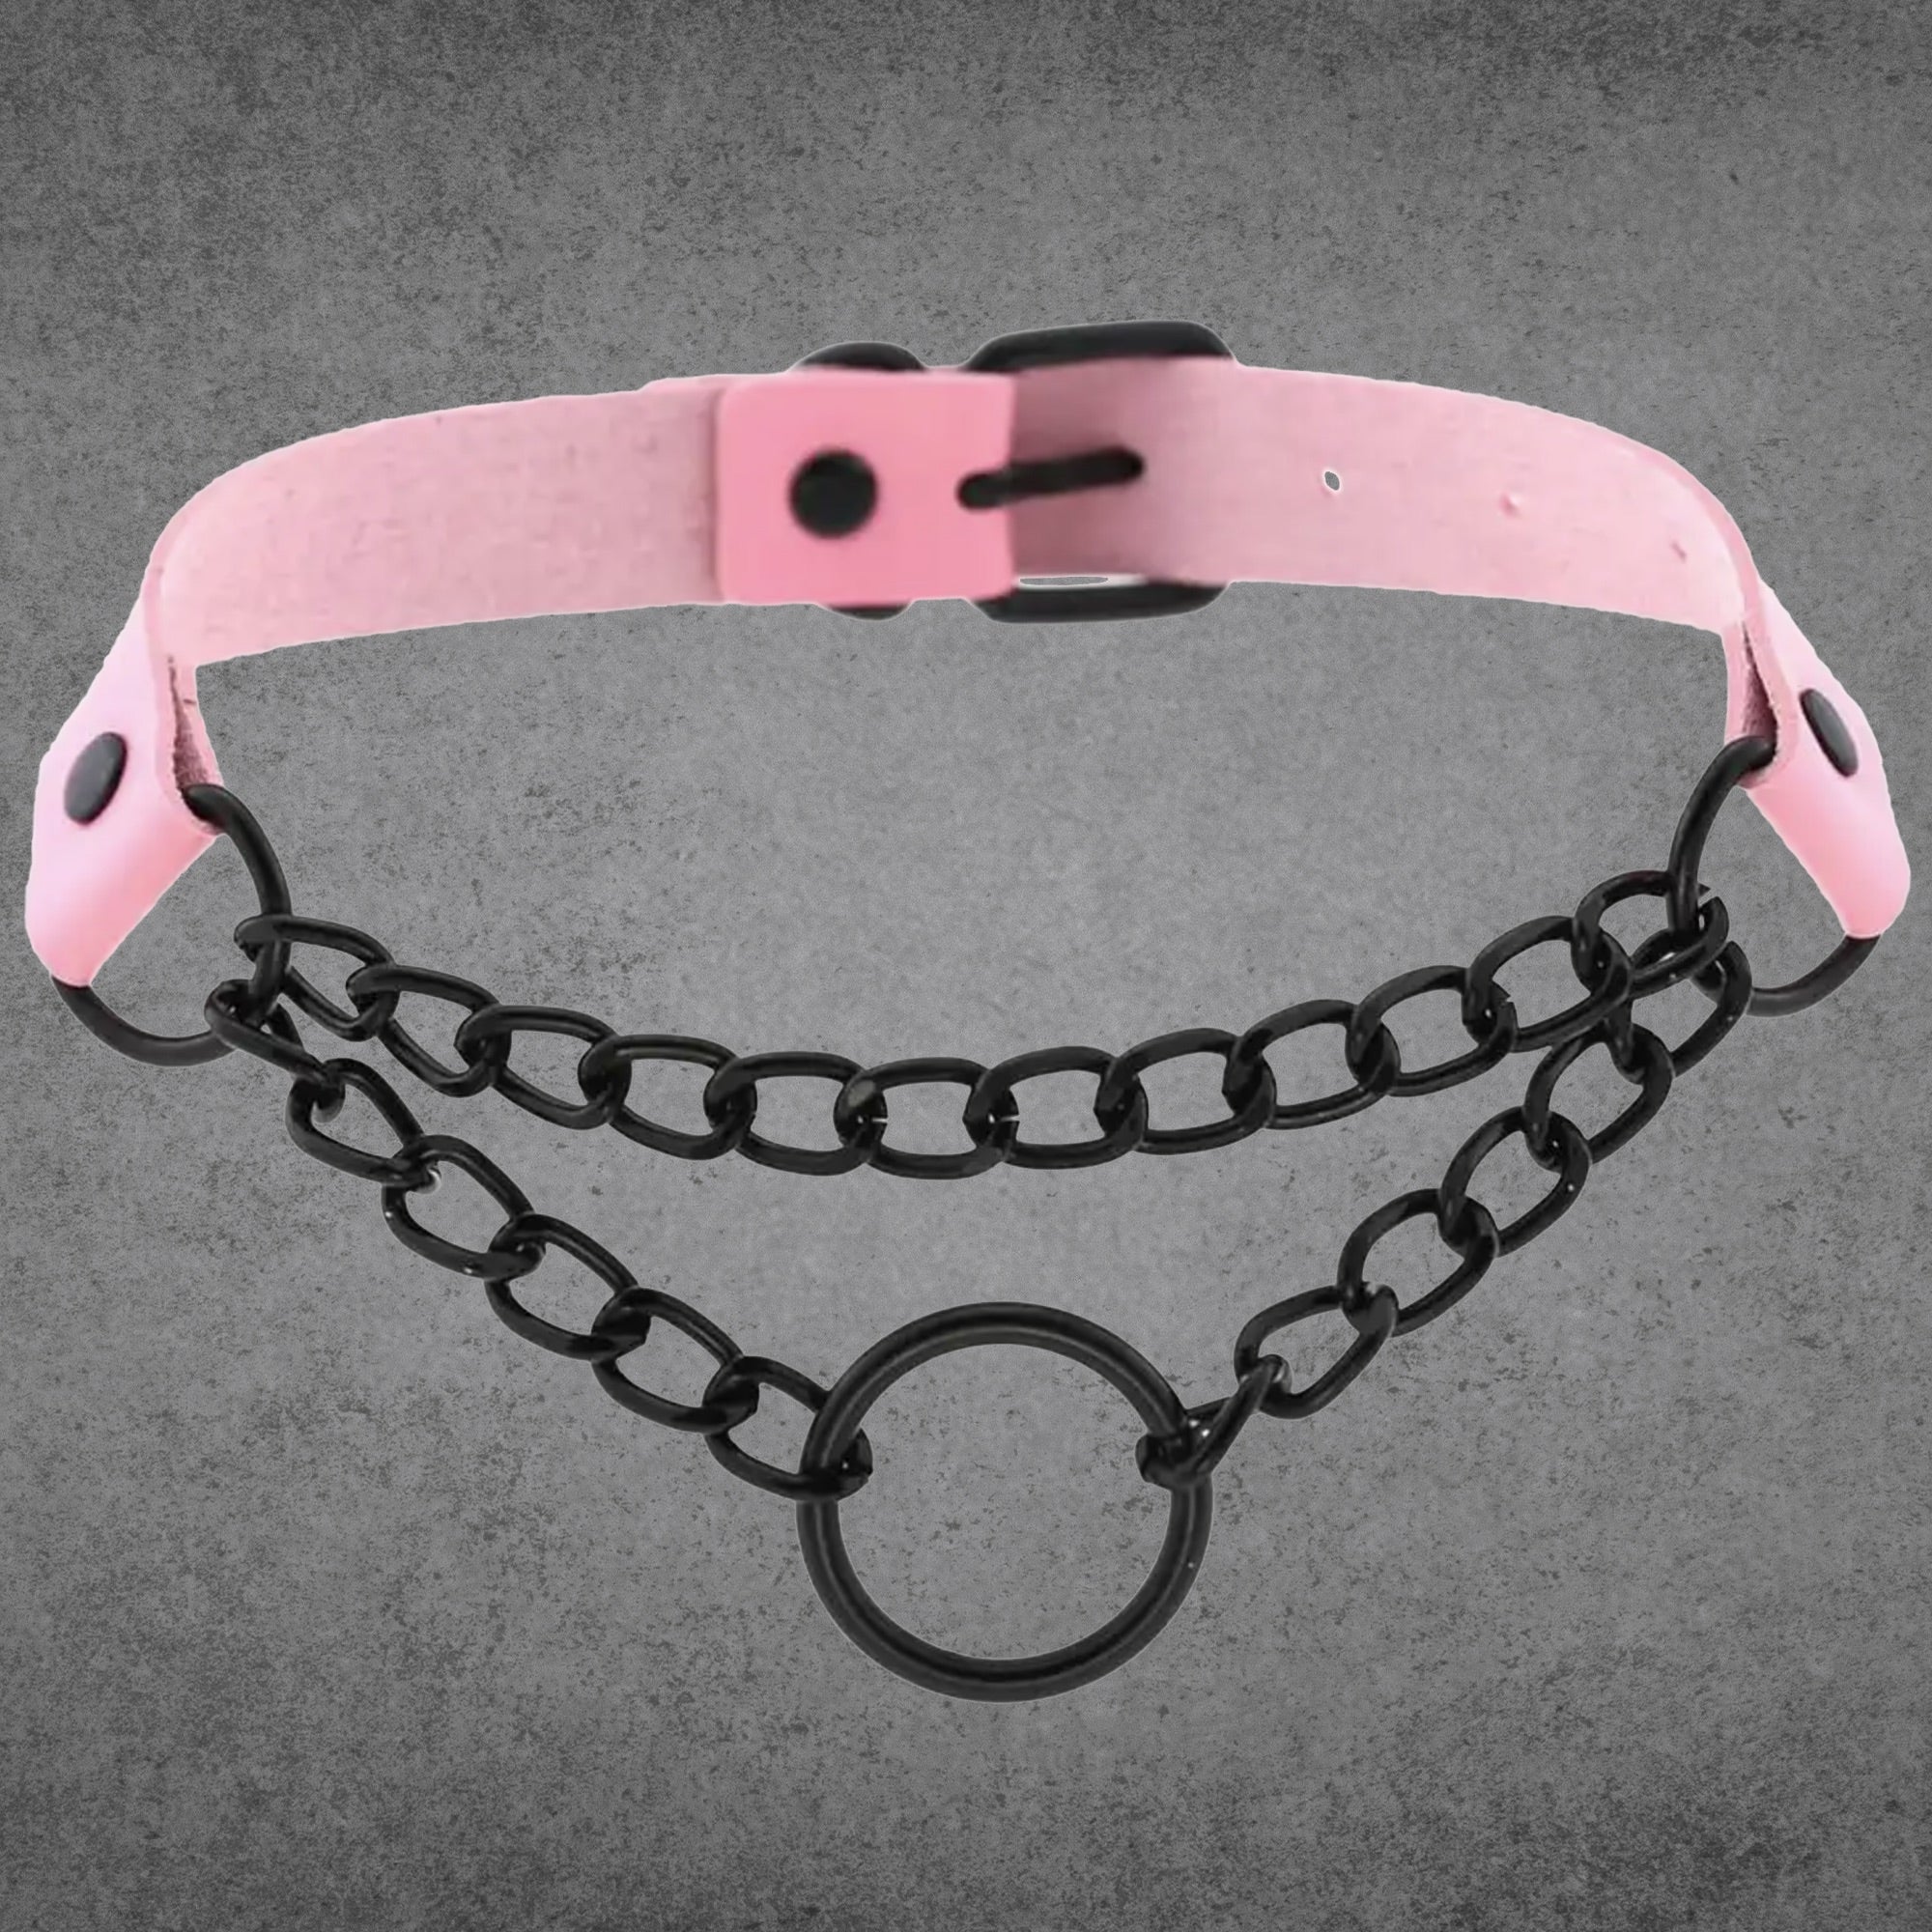 O Ring Layered Collar - Baby Pink